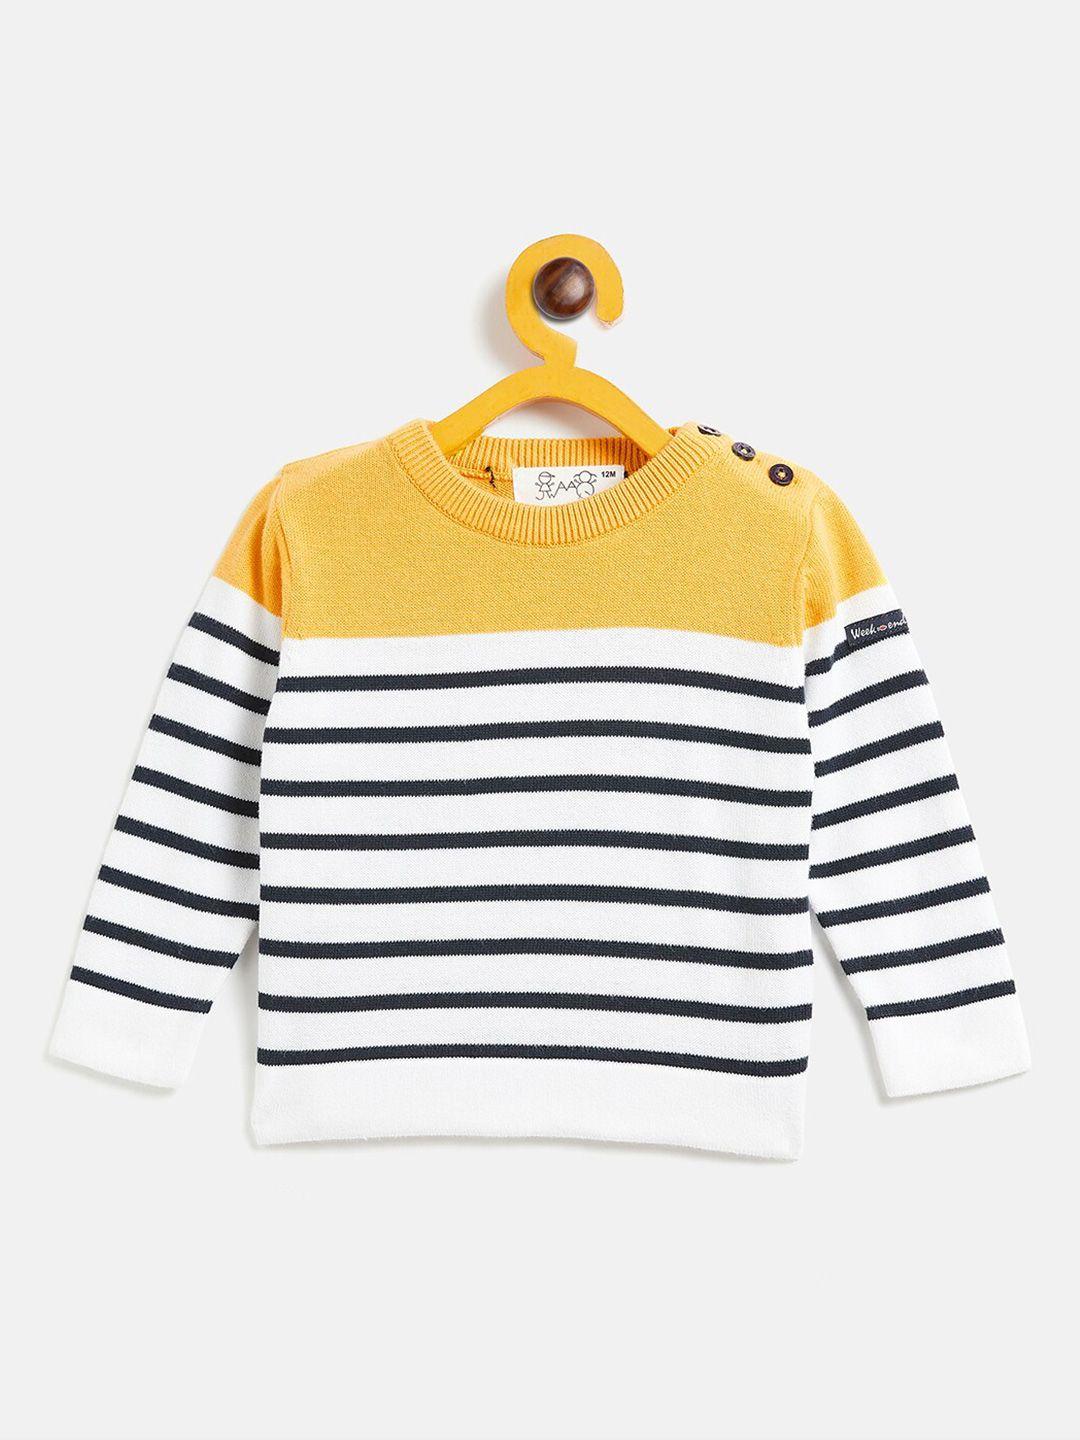 jwaaq-unisex-kids-yellow-&-white-striped-pullover